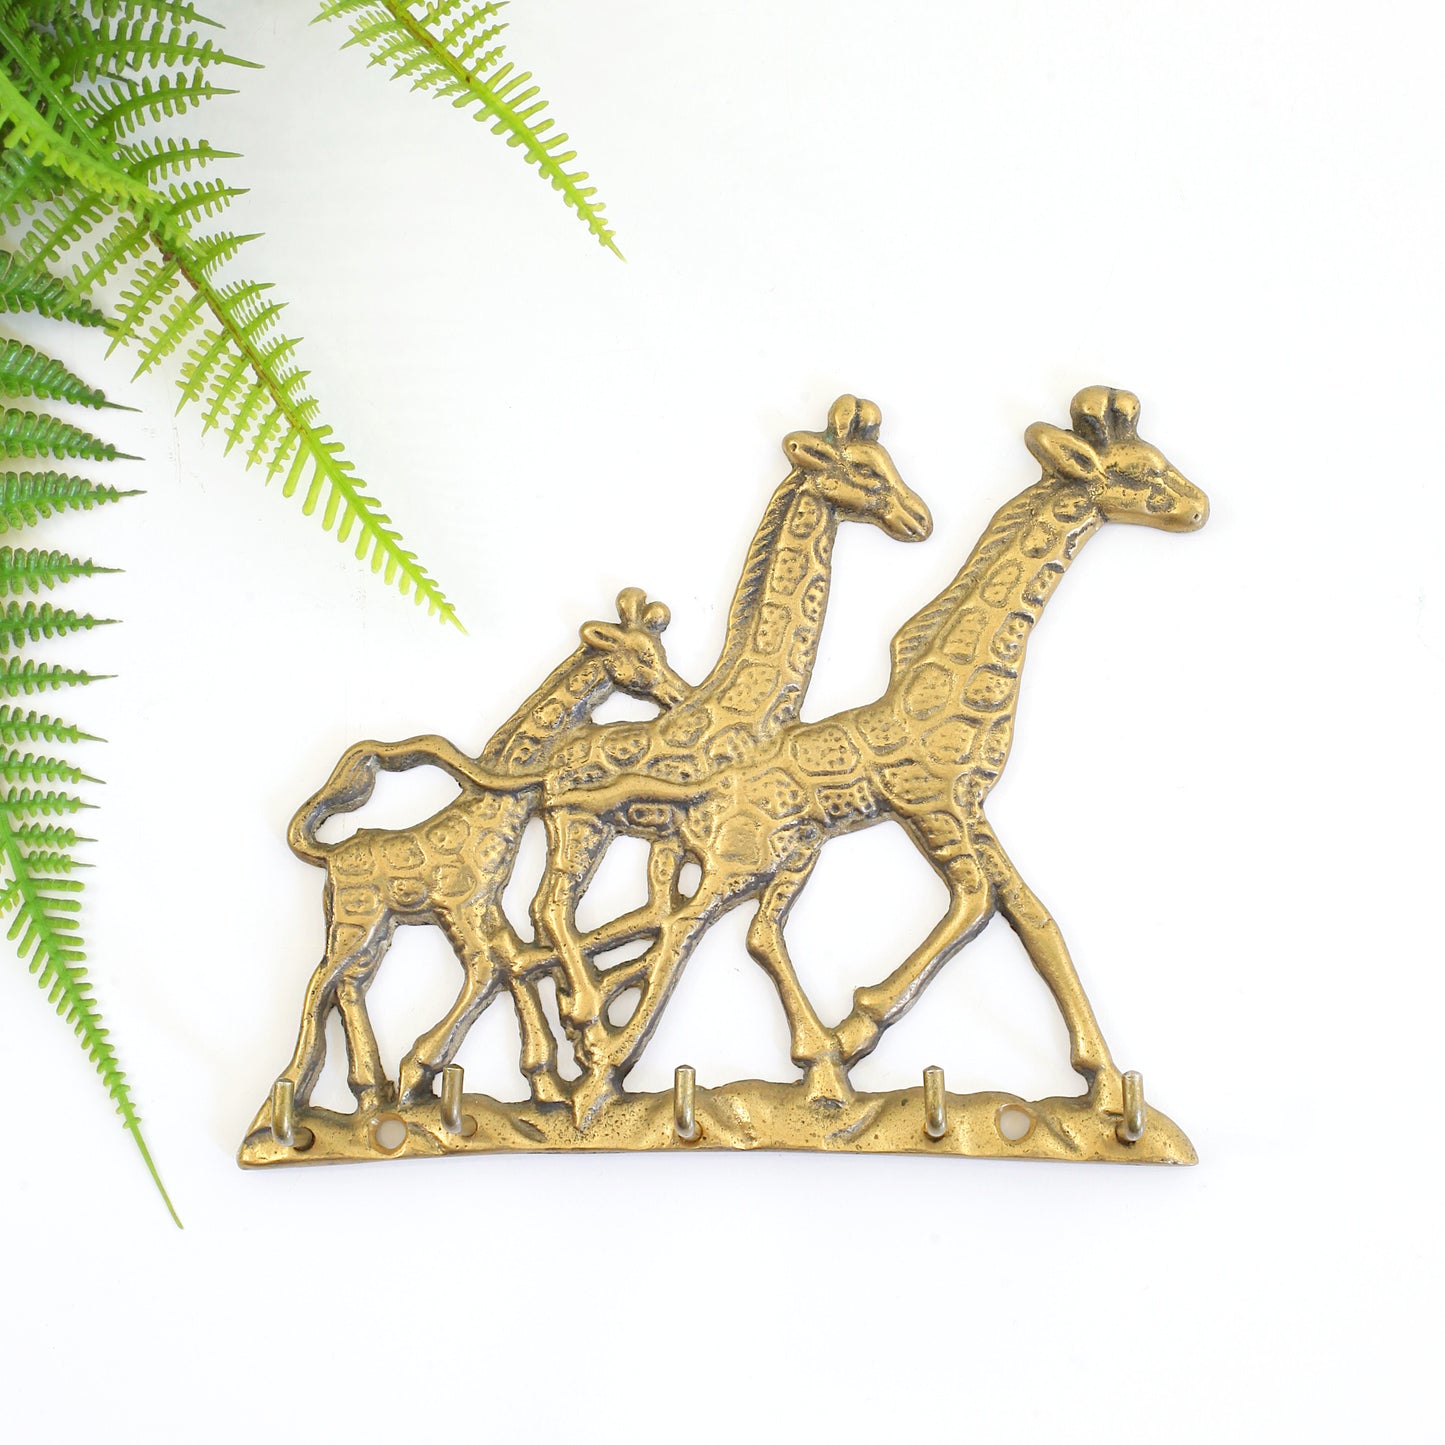 SOLD - Vintage Brass Giraffe Wall Hooks